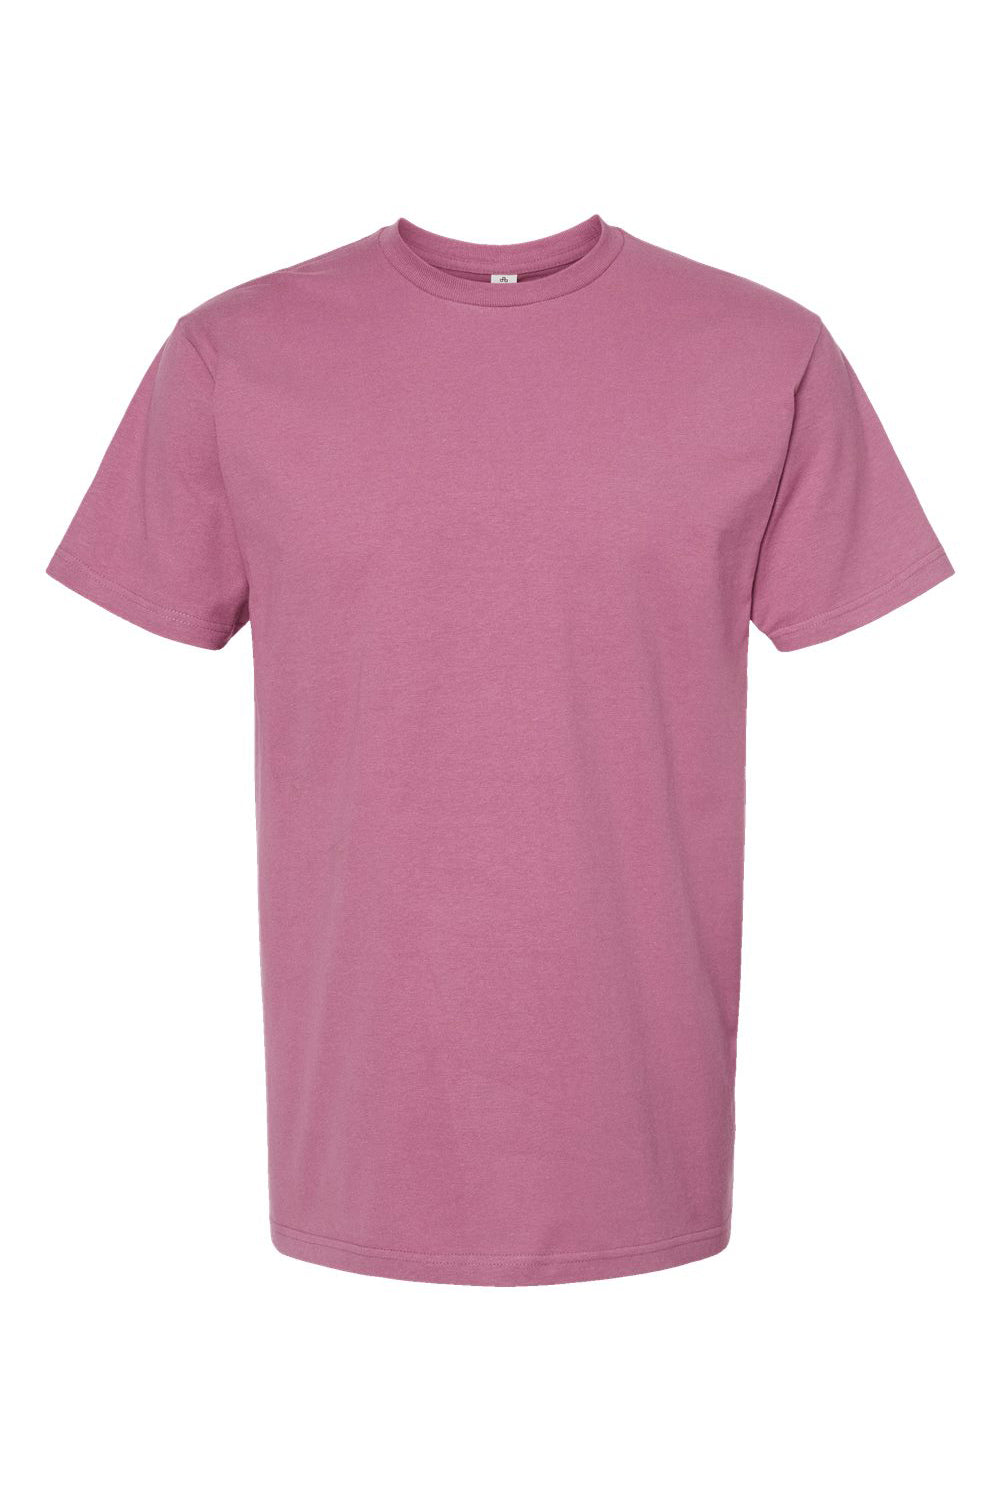 Tultex 290 Mens Jersey Short Sleeve Crewneck T-Shirt Cassis Pink Flat Front